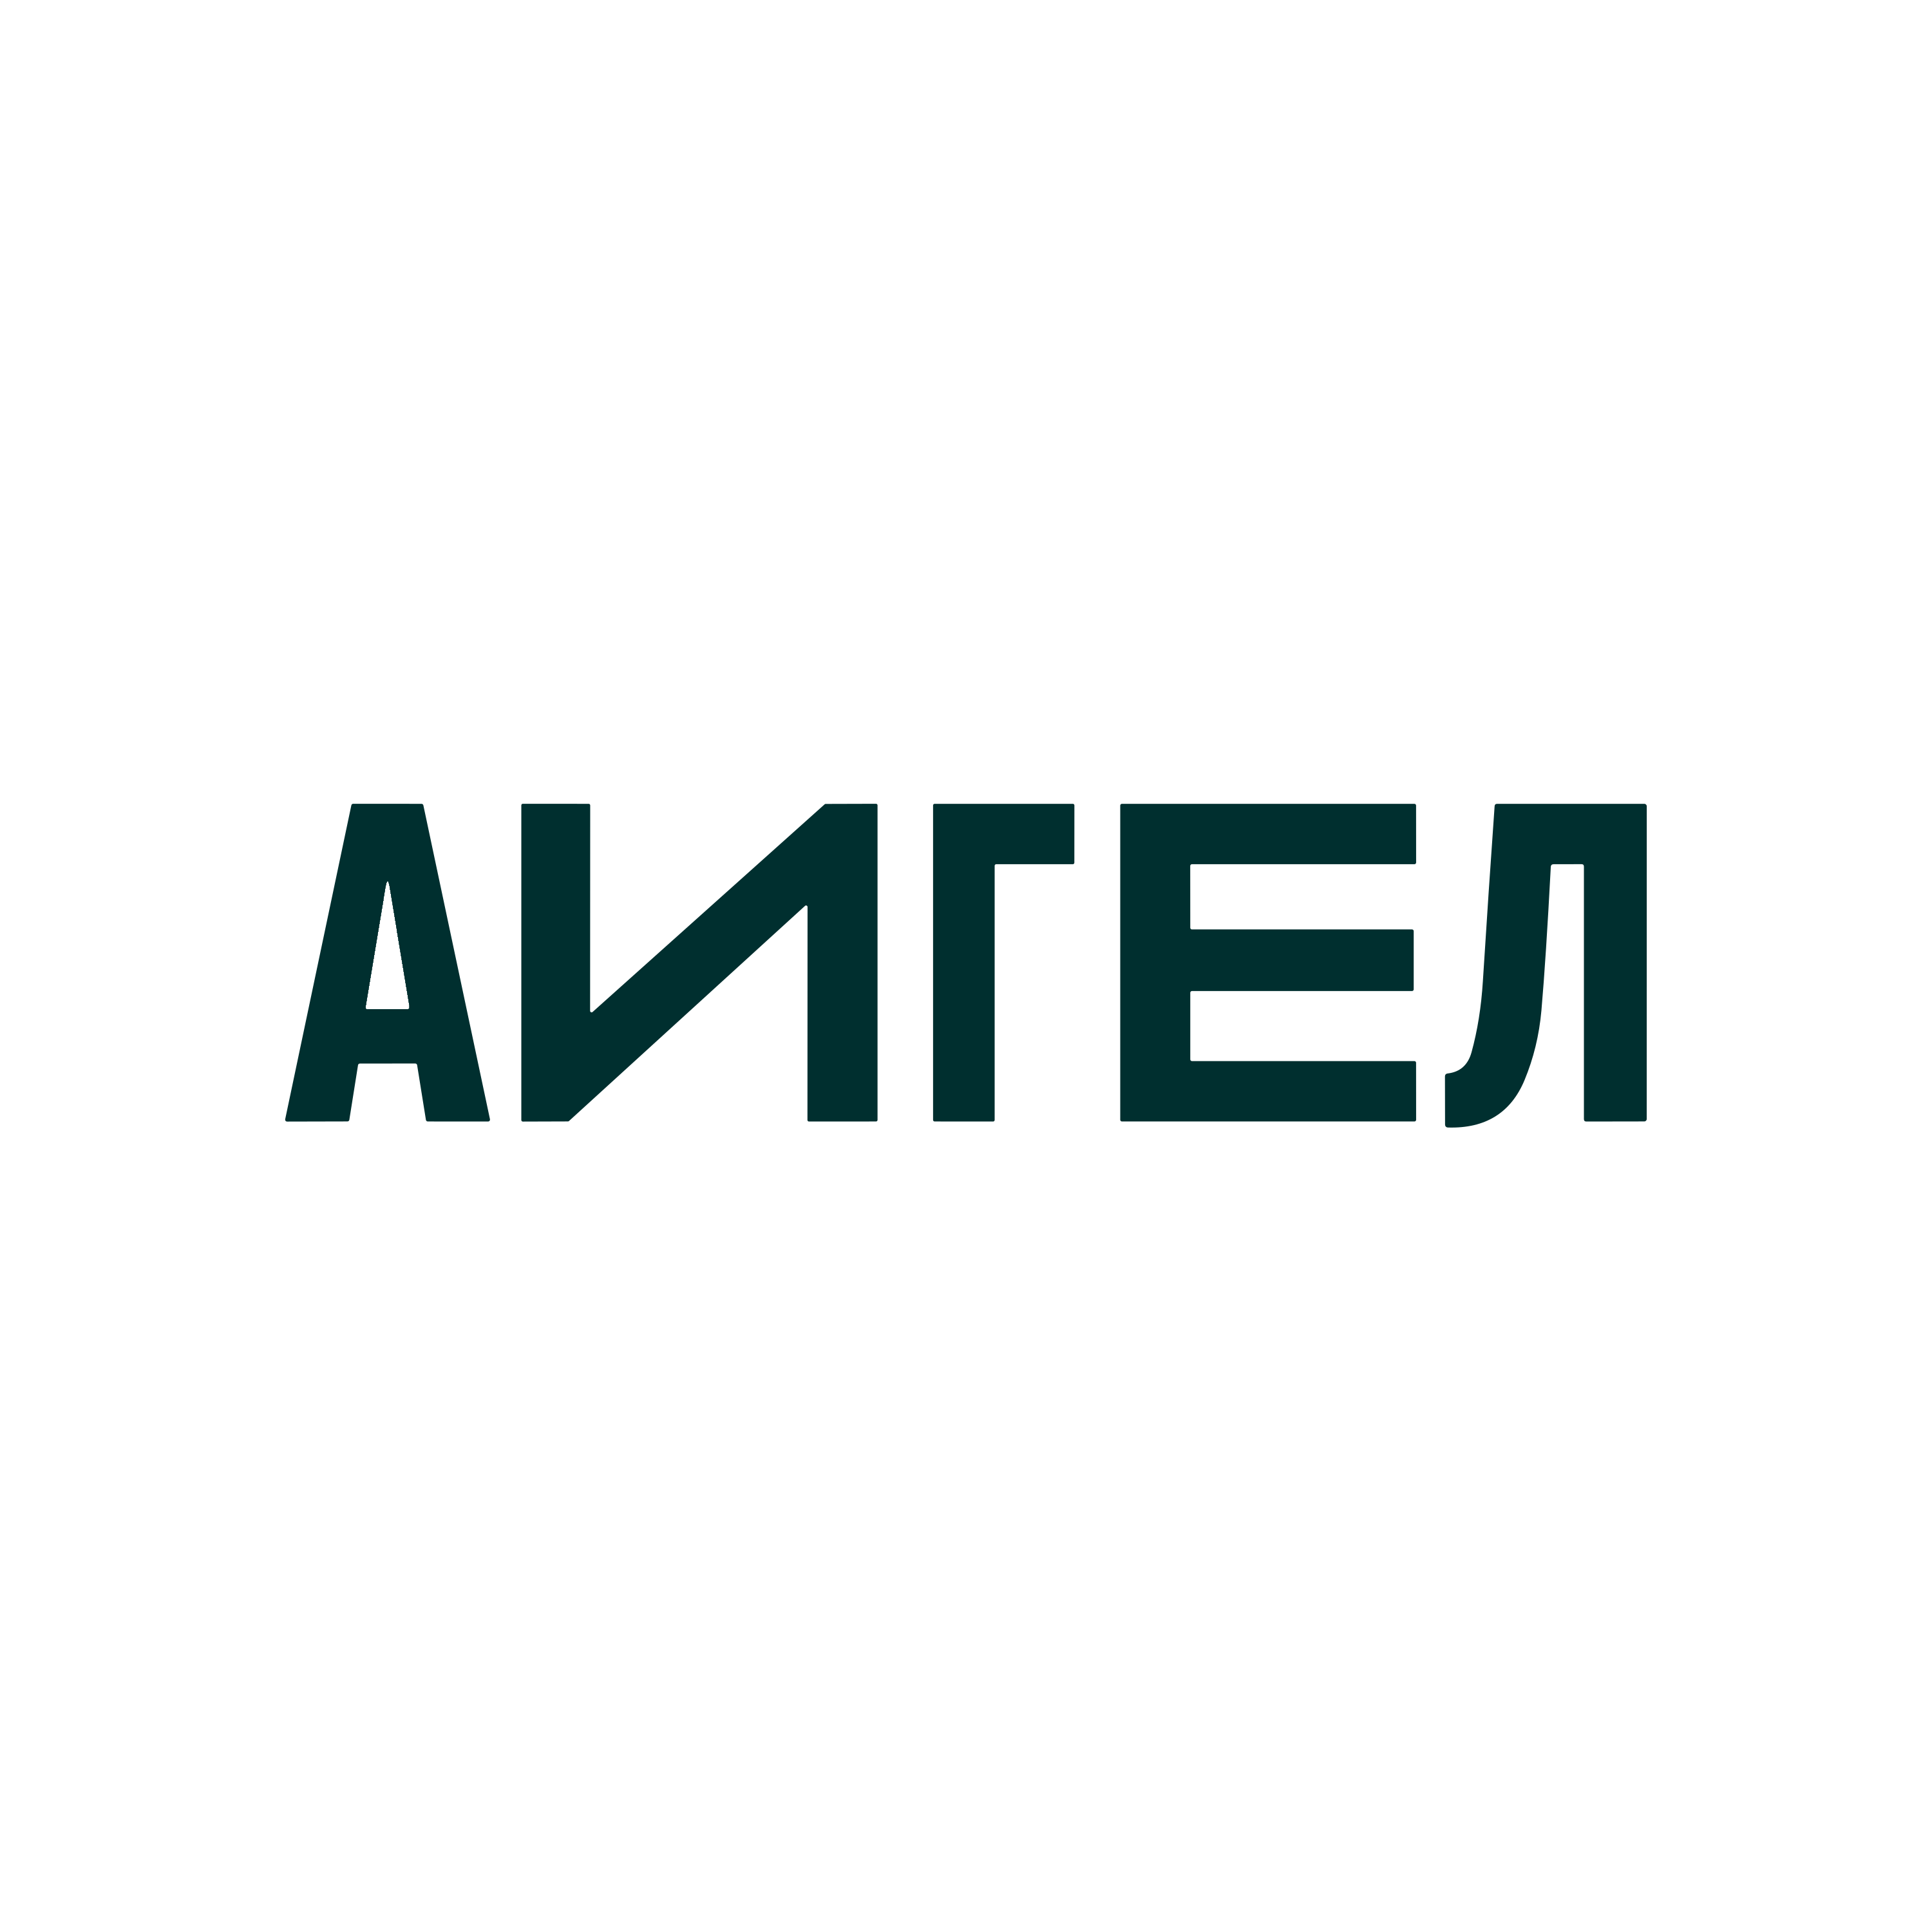 Aigel Logo  Transparent Gallery